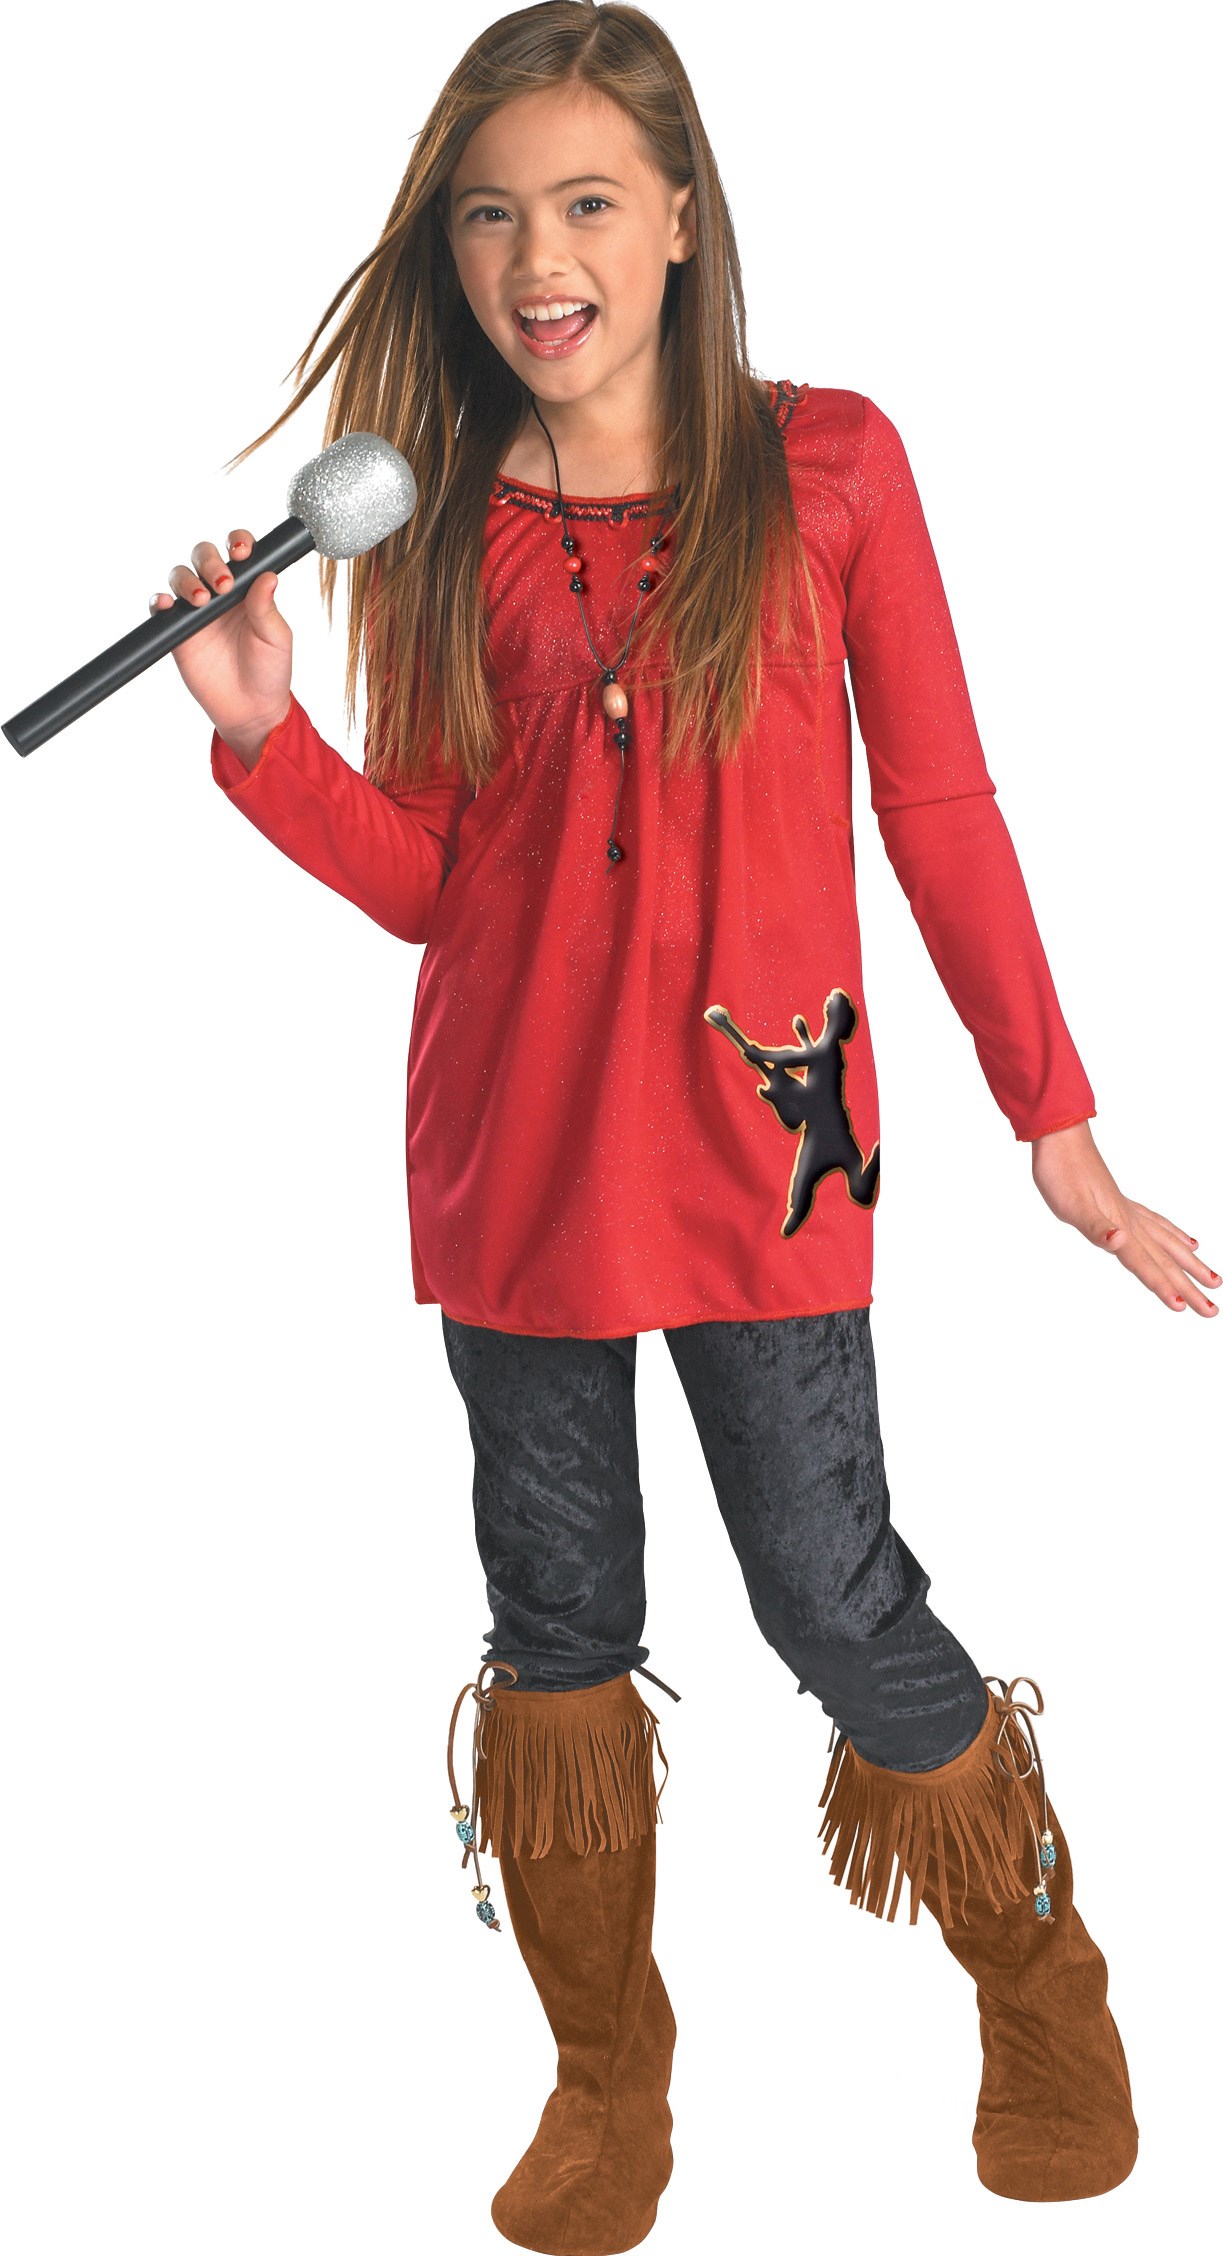 Camp Rock Mitchie Torres Red Classic Child Costume